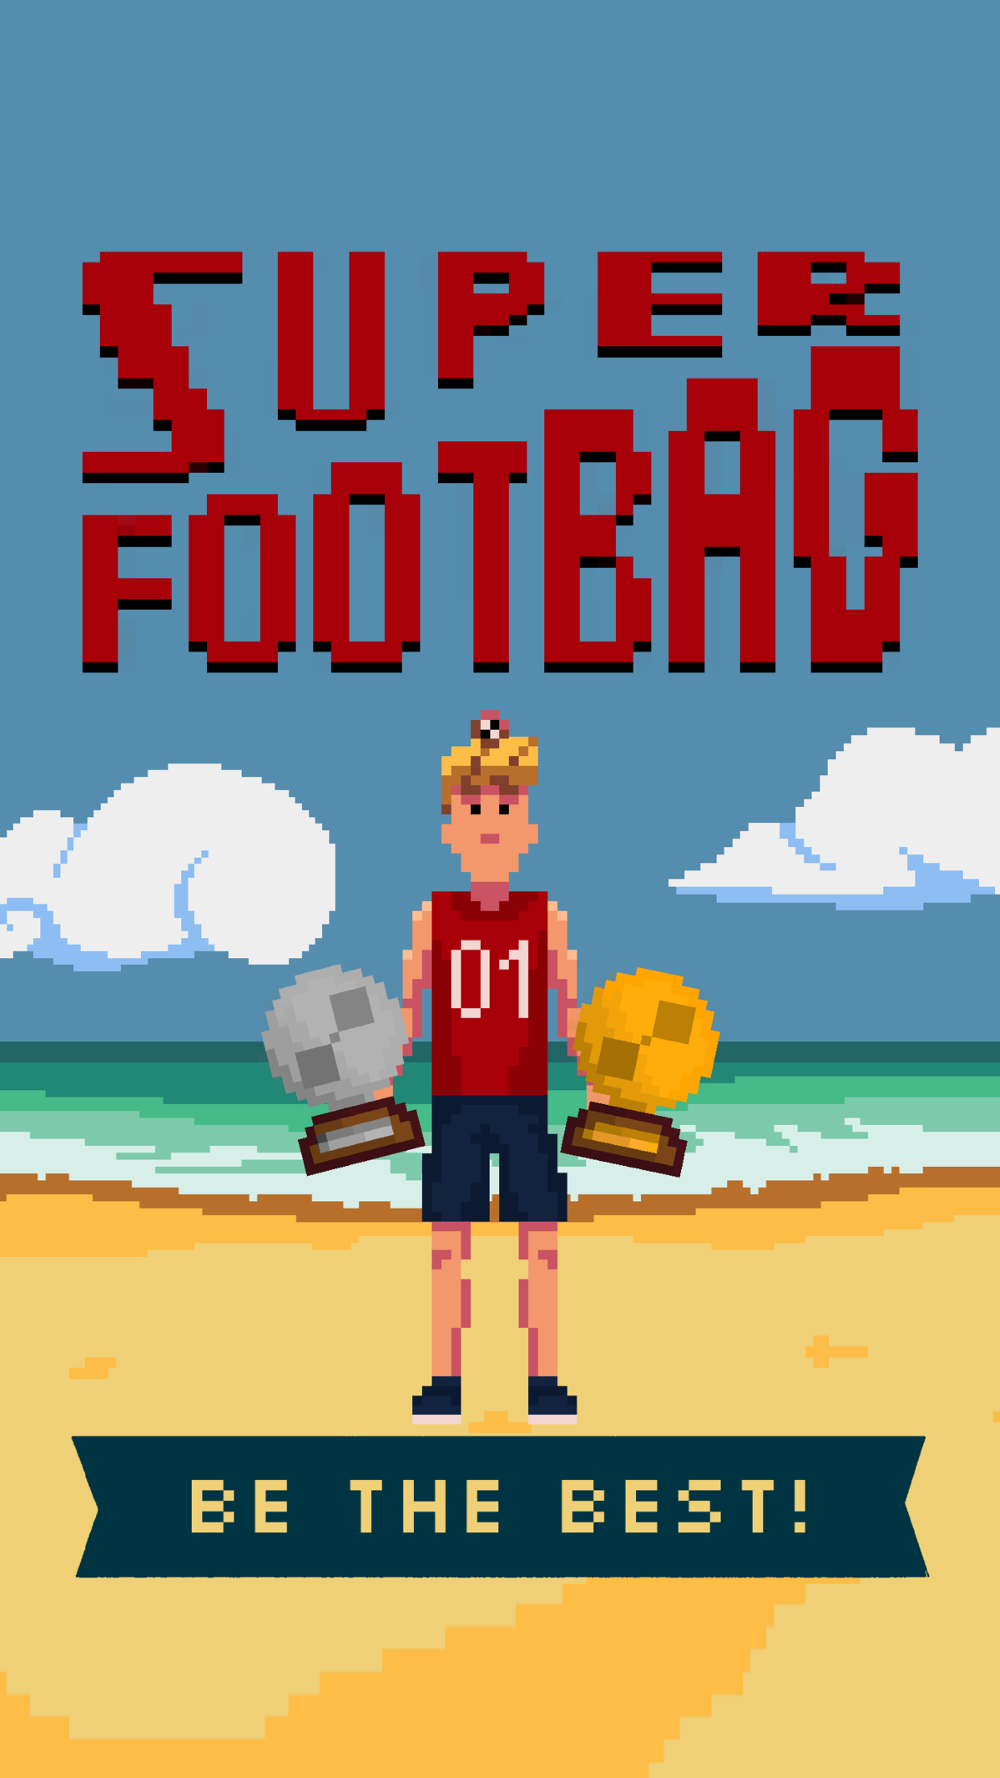 Super Footbag - World Champion 8 Bit Sports App for iPhone - STEPrimo.com